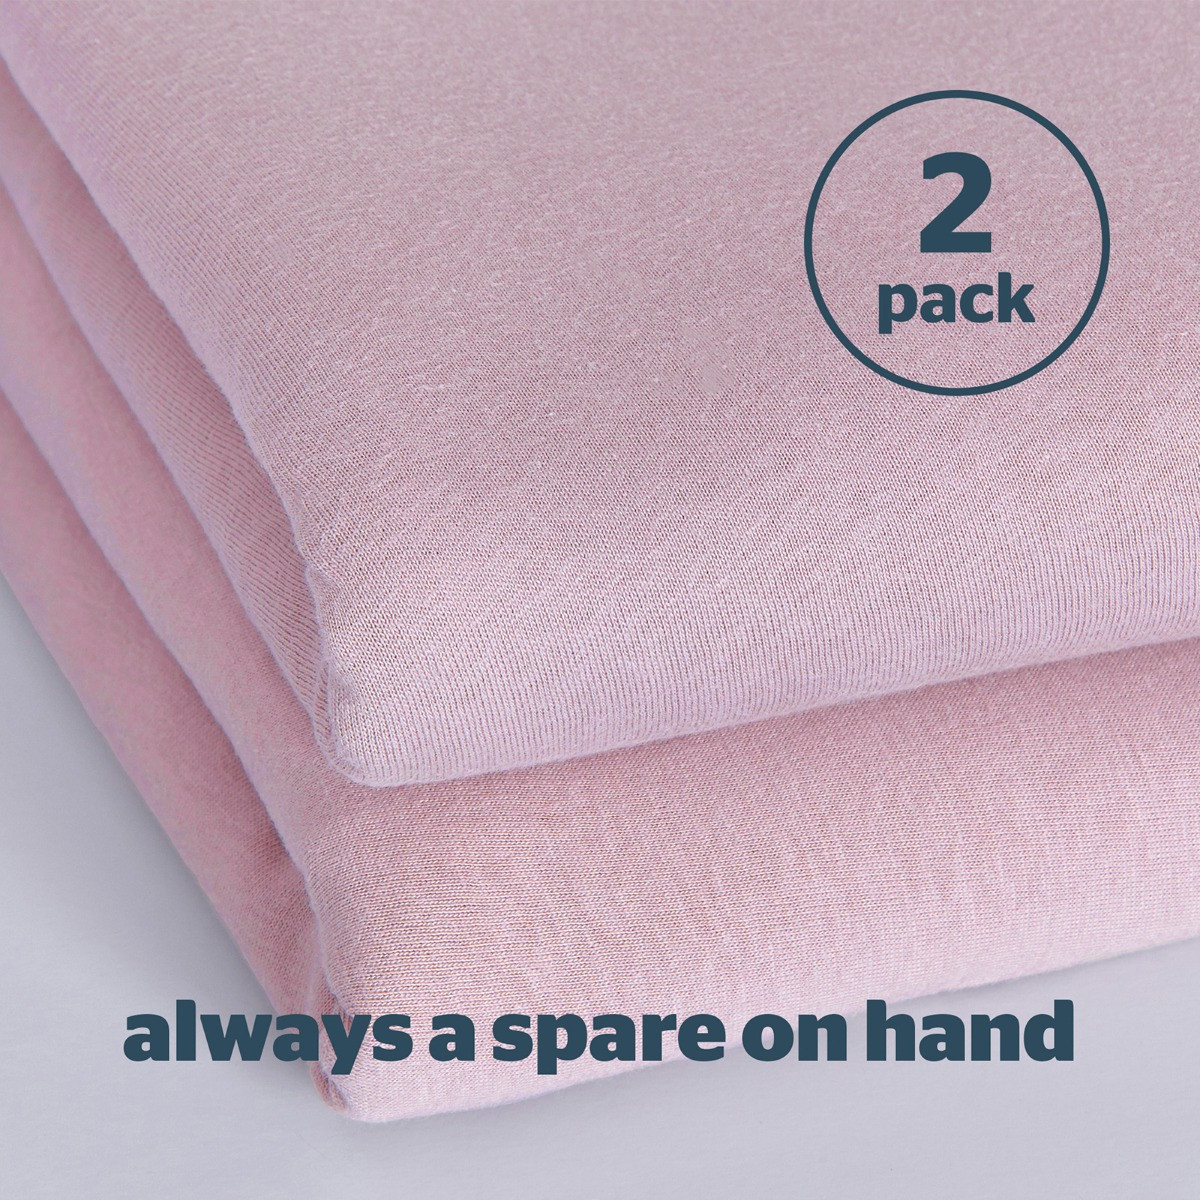 Silentnight Safe Nights 2 Pack Fitted Sheet Cot Bed Pink 1224